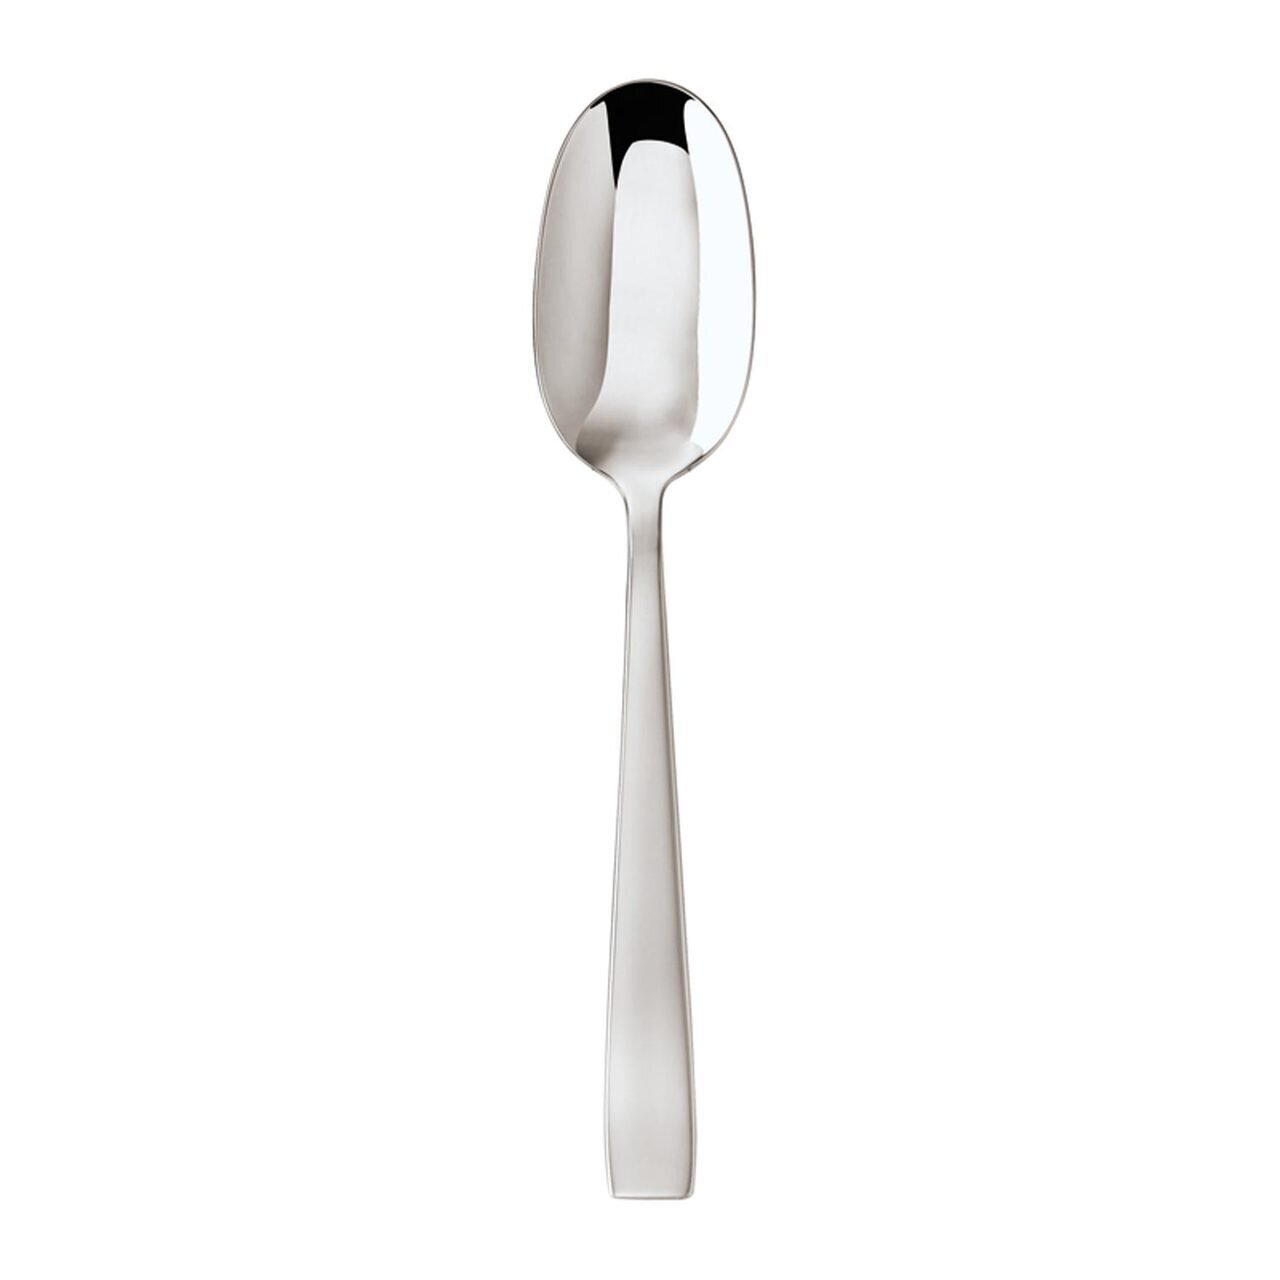 Sambonet Flat Table Spoon 62712-01